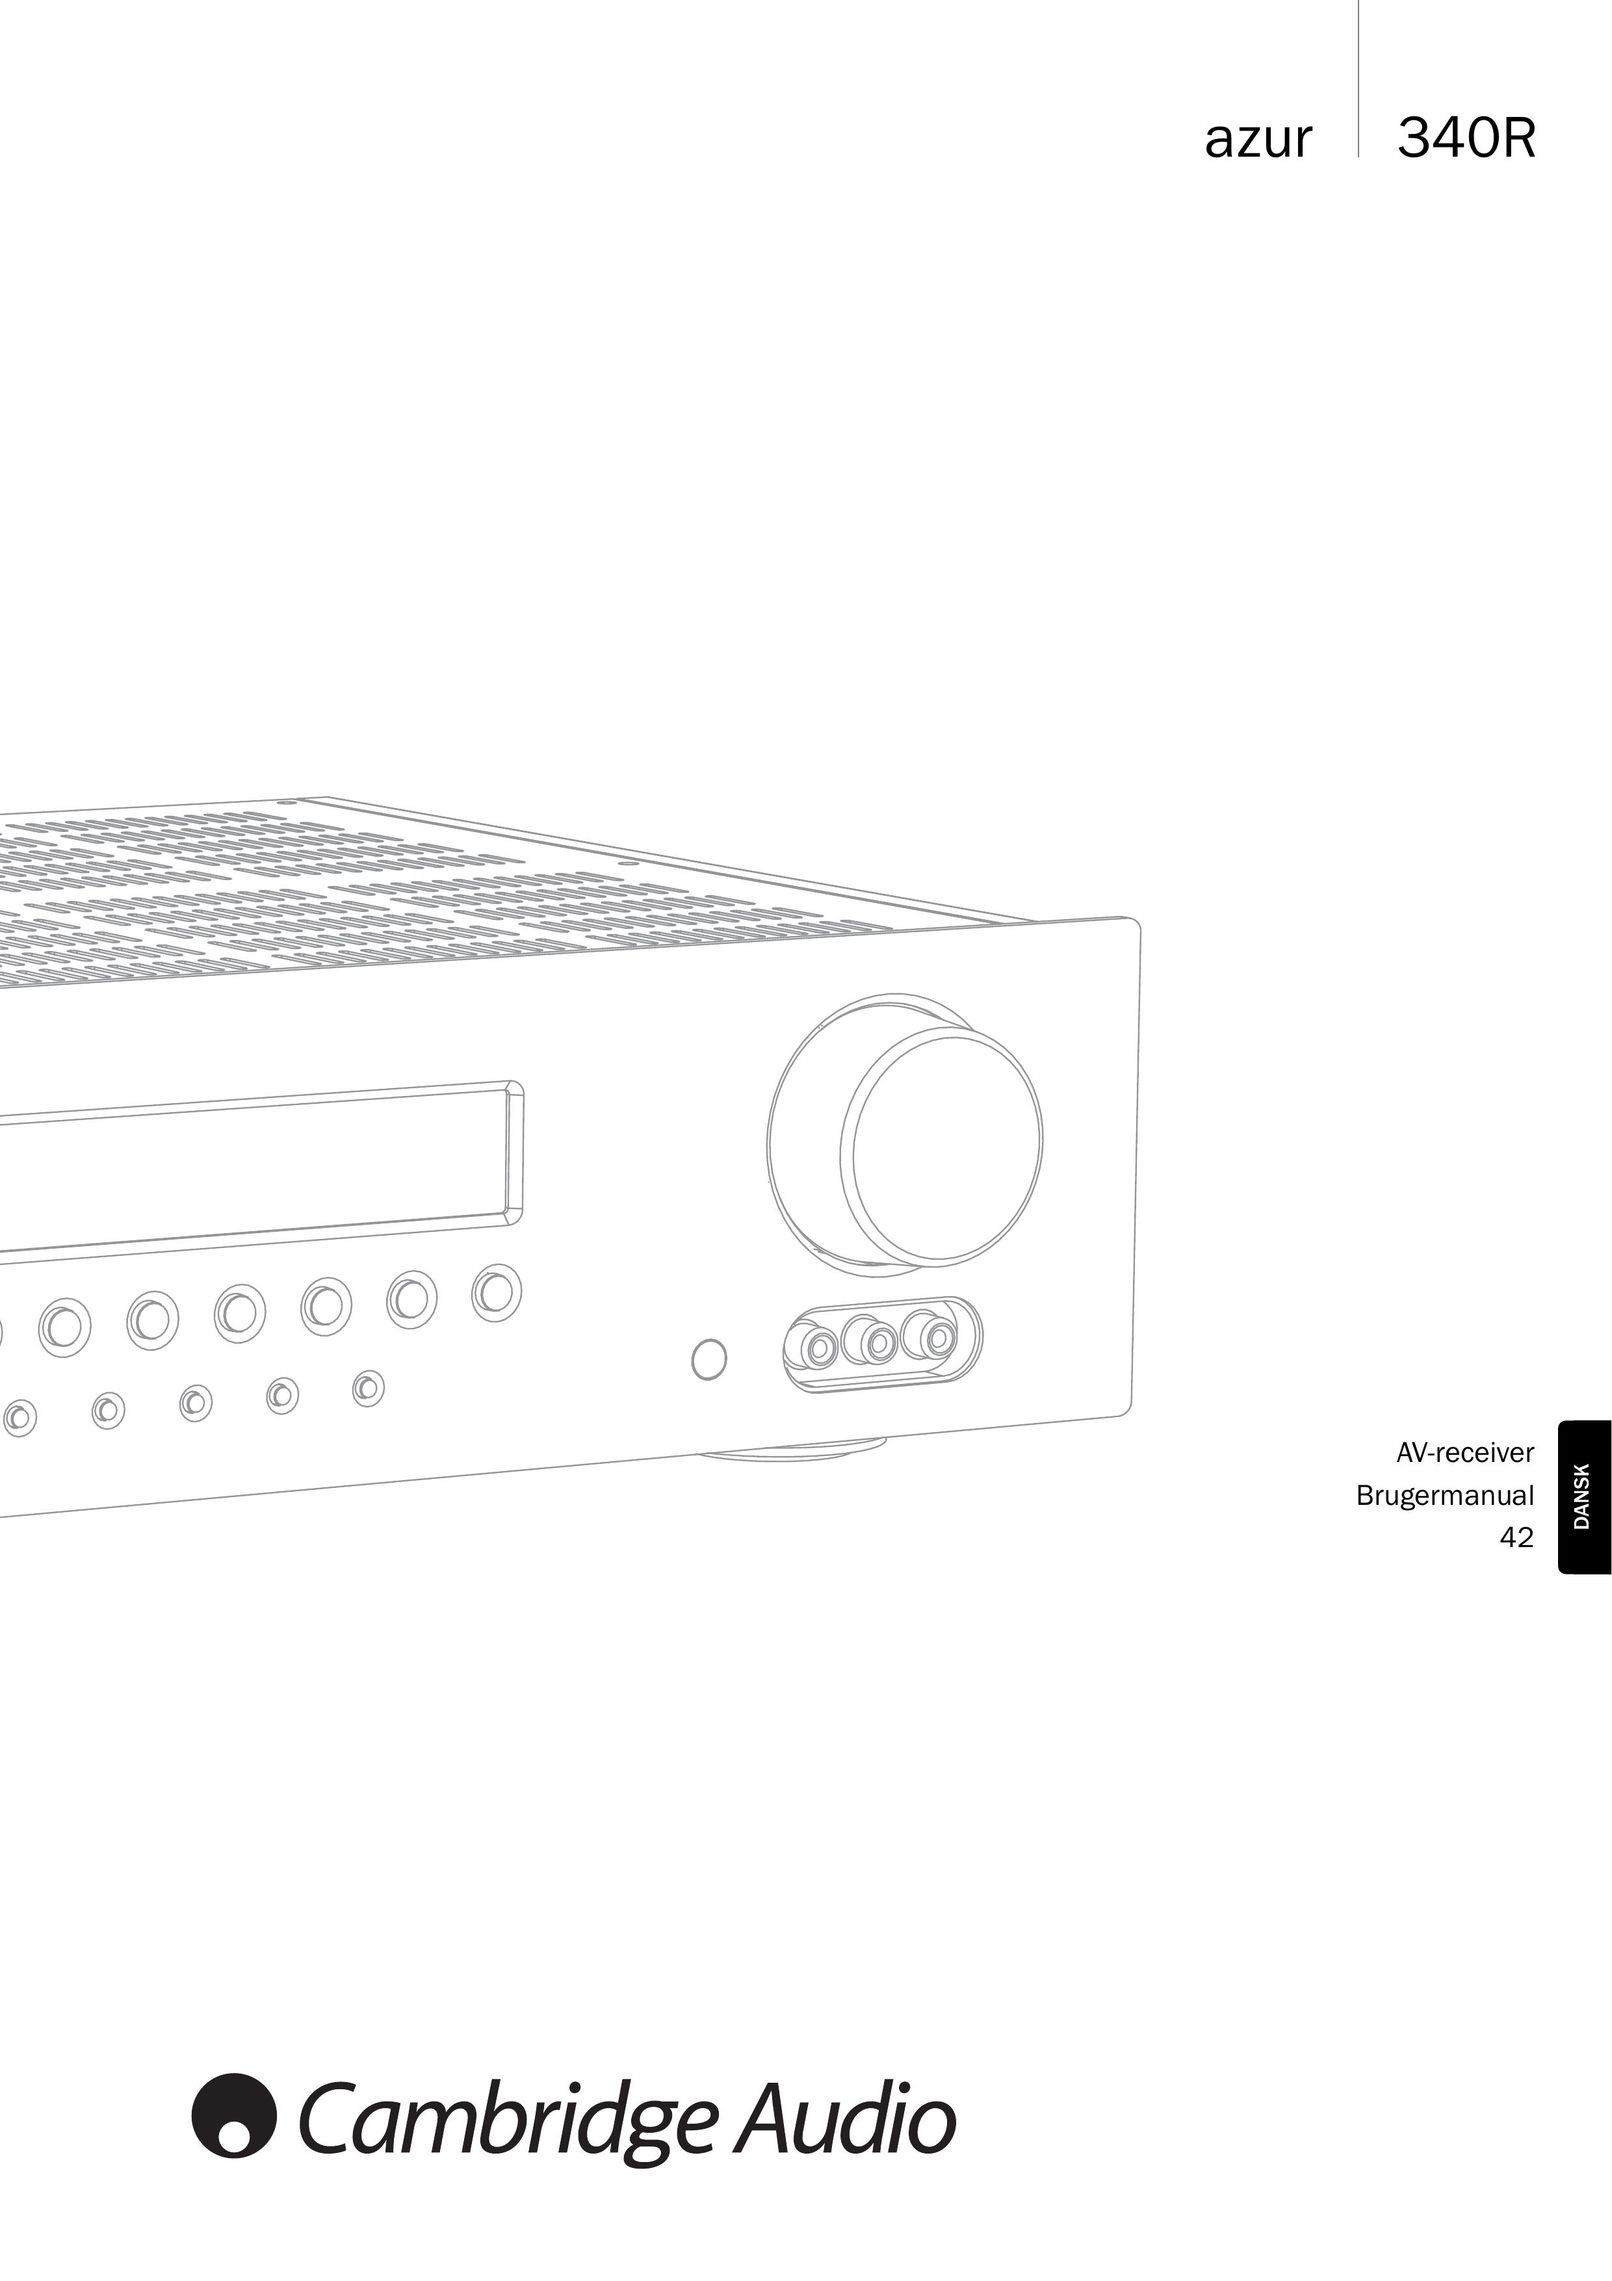 Cambridge Audio 340R Stereo Receiver User Manual